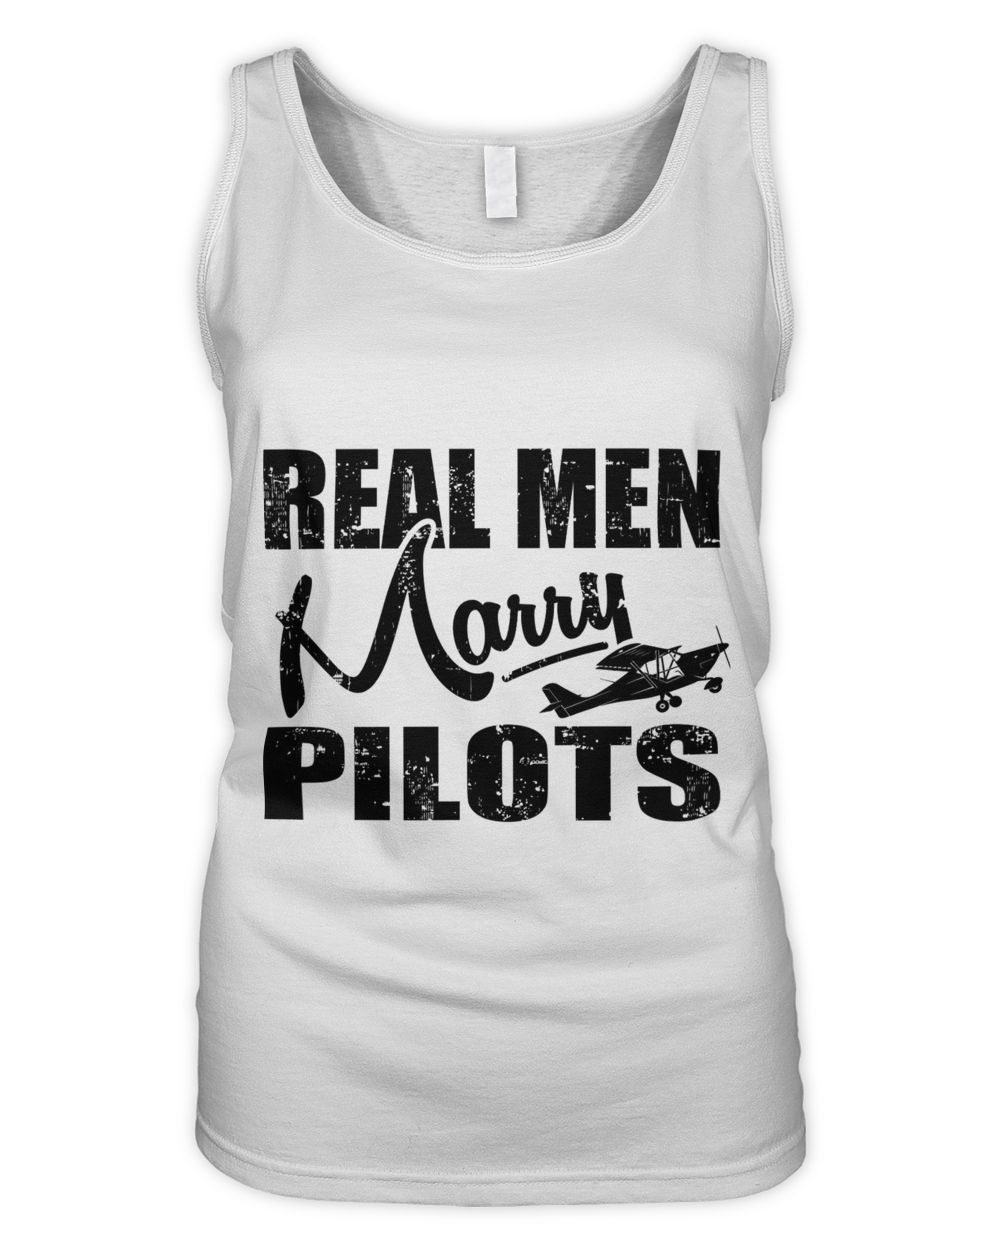 Real men marry pilots Women's Tank Top white 